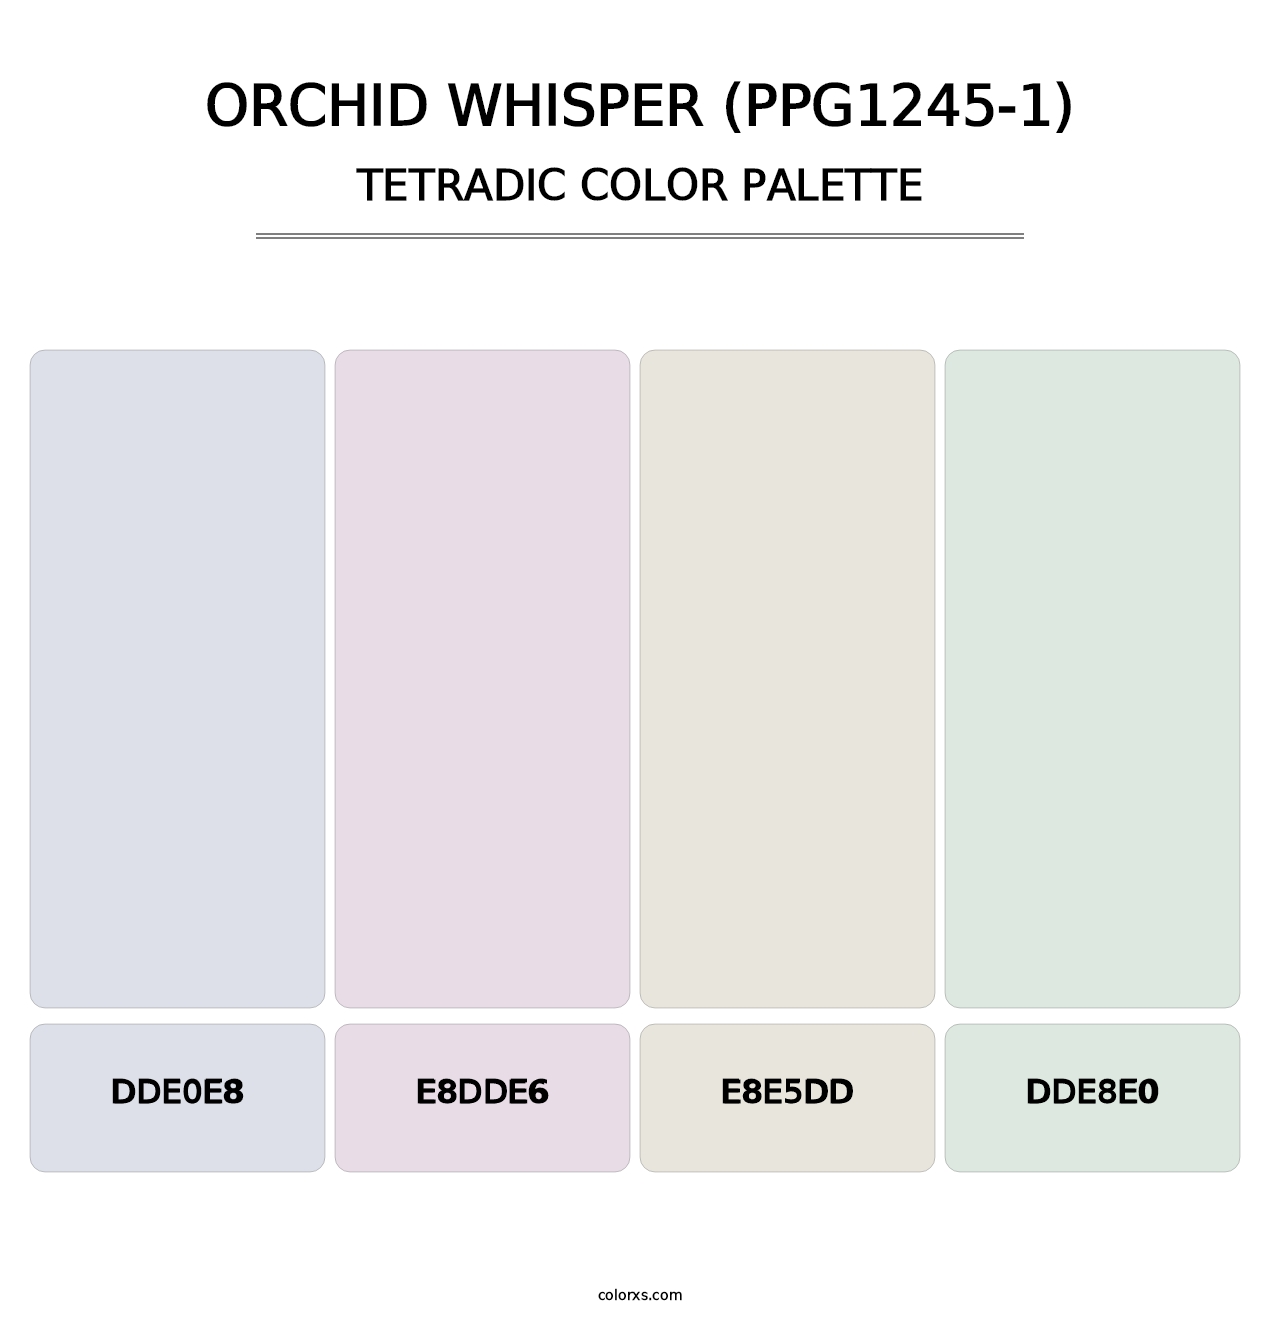 Orchid Whisper (PPG1245-1) - Tetradic Color Palette